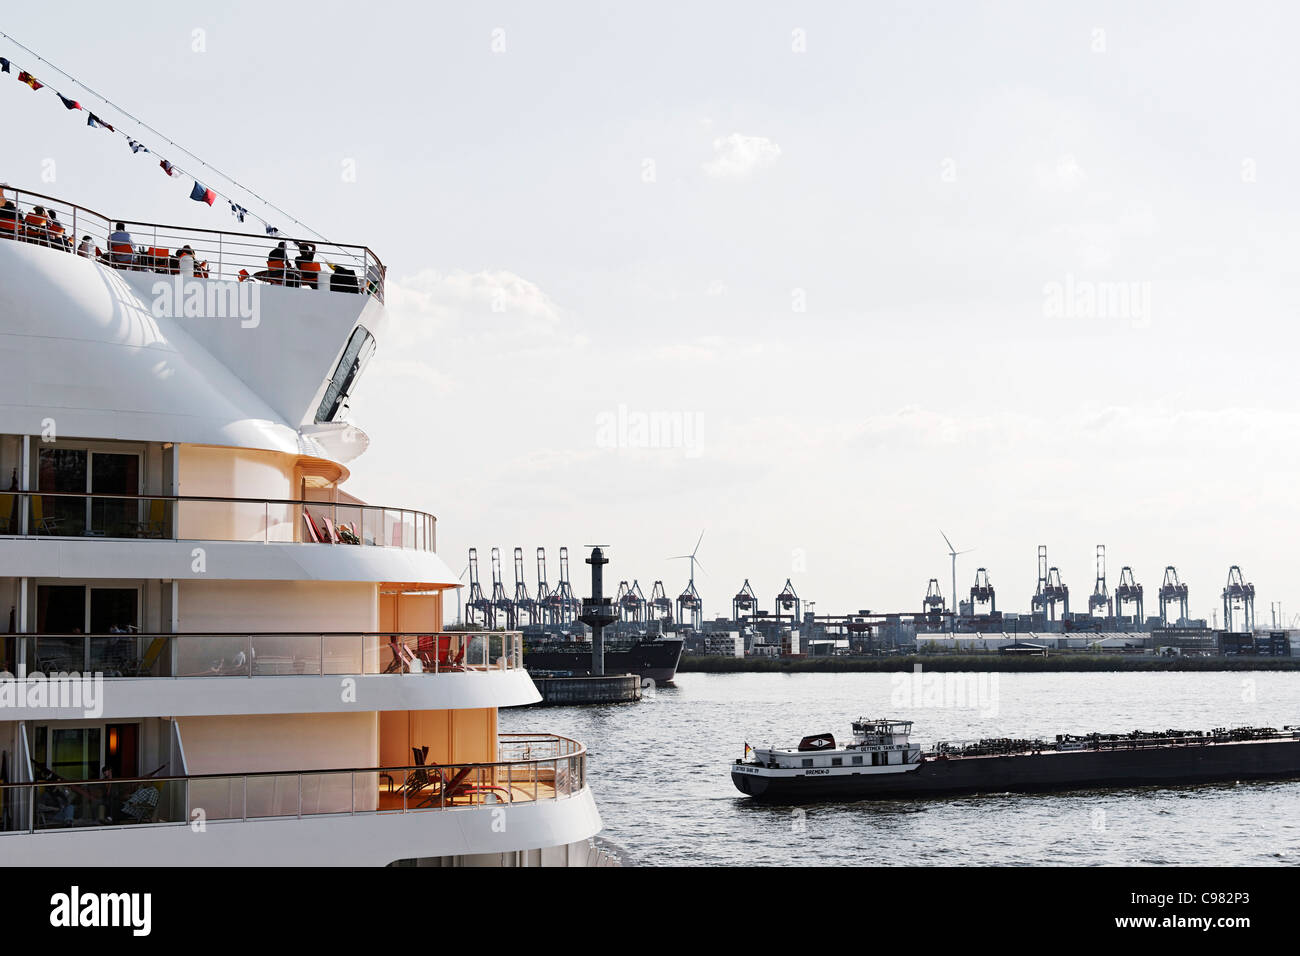 AIDA Cruiseship at the cruise terminal at Altona, Hamburg, Germany, Europe Stock Photo